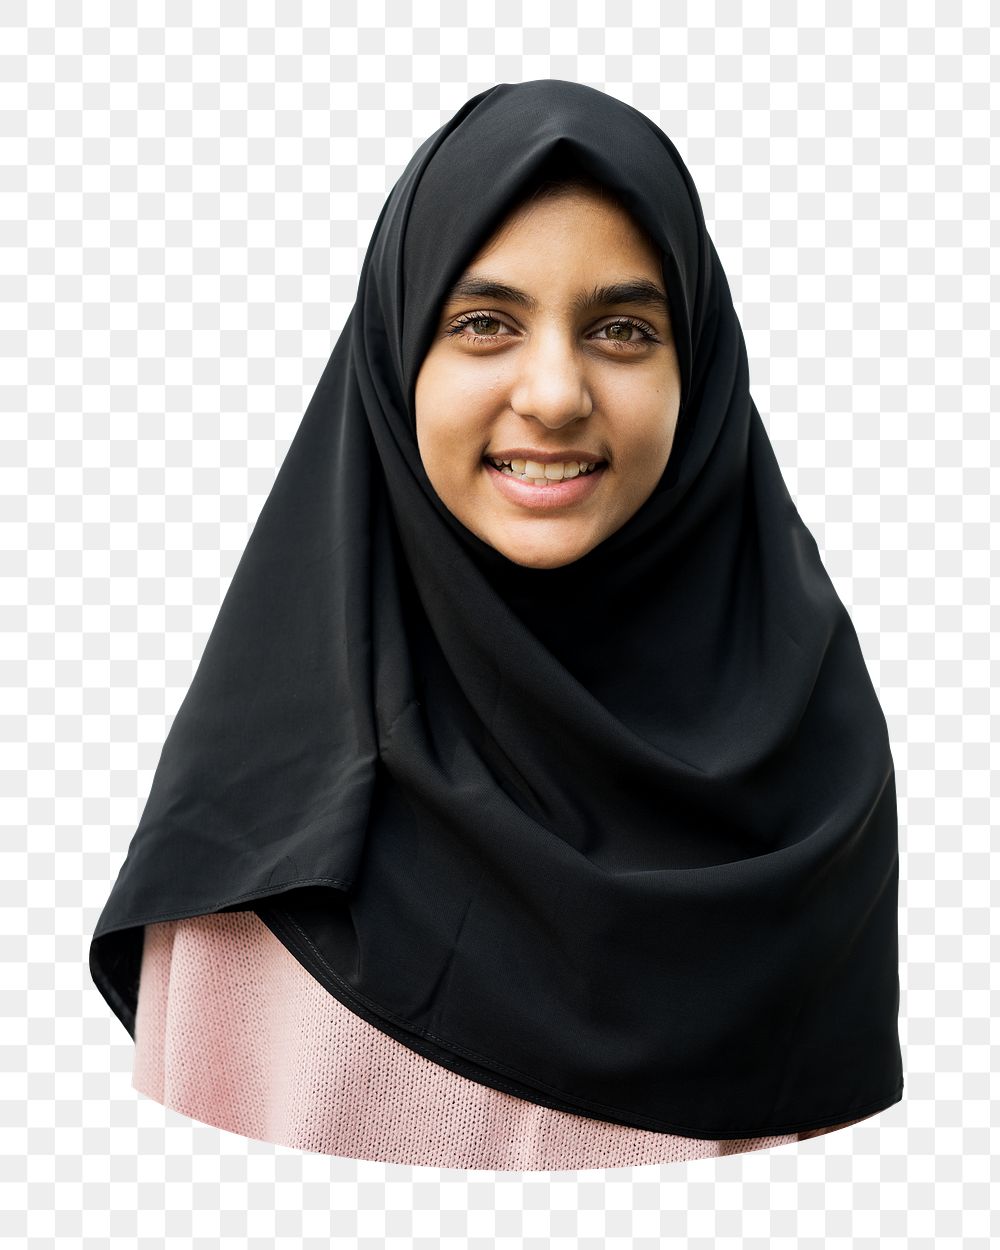 Cheerful Muslim woman png sticker, transparent background